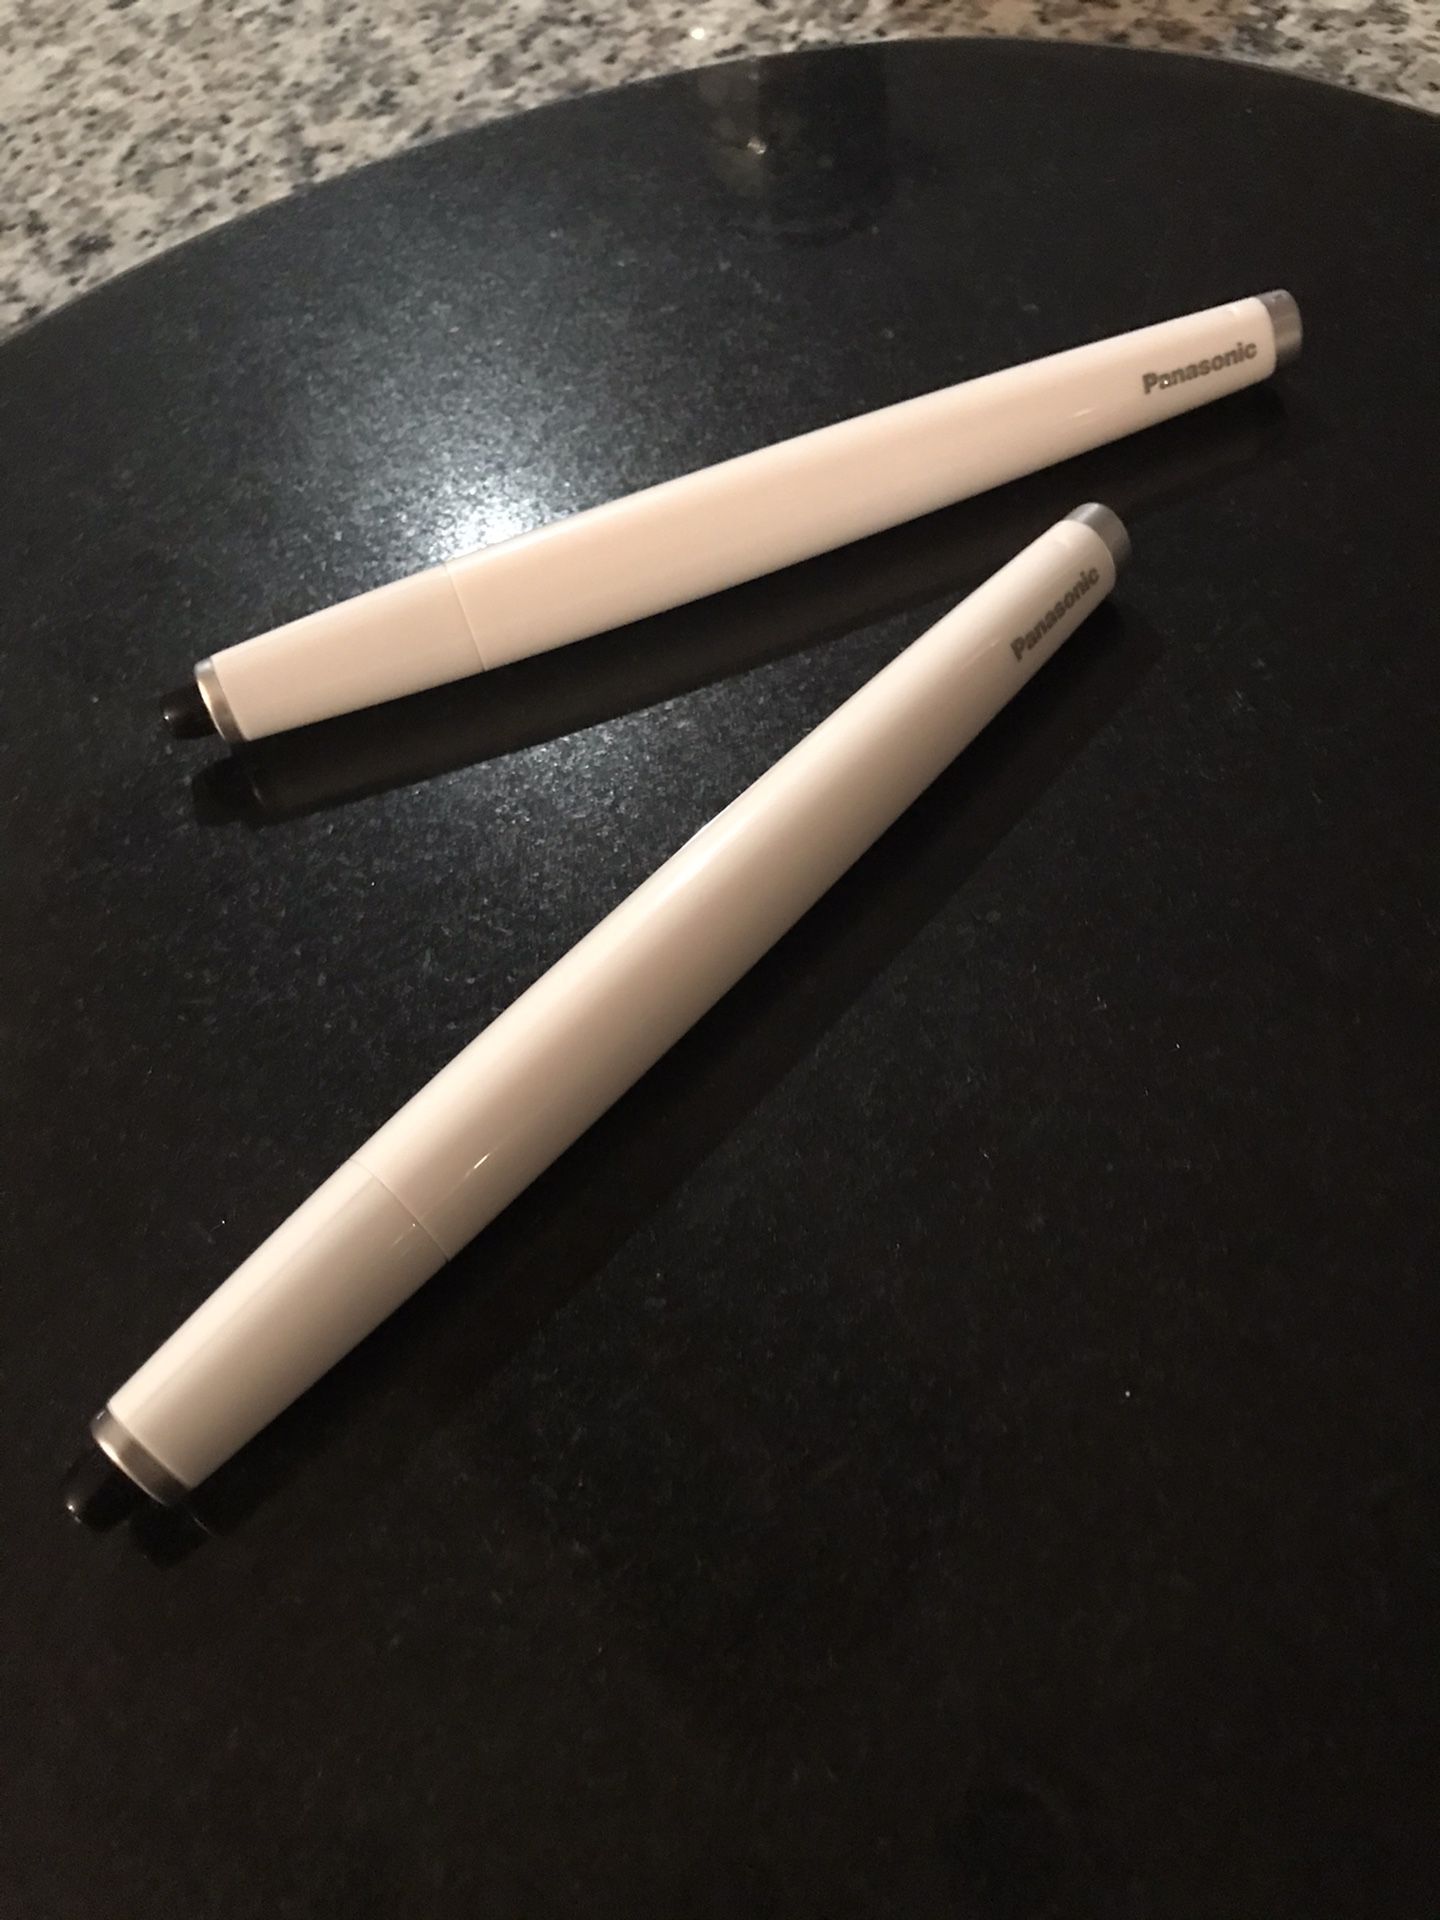 Samsung Pen